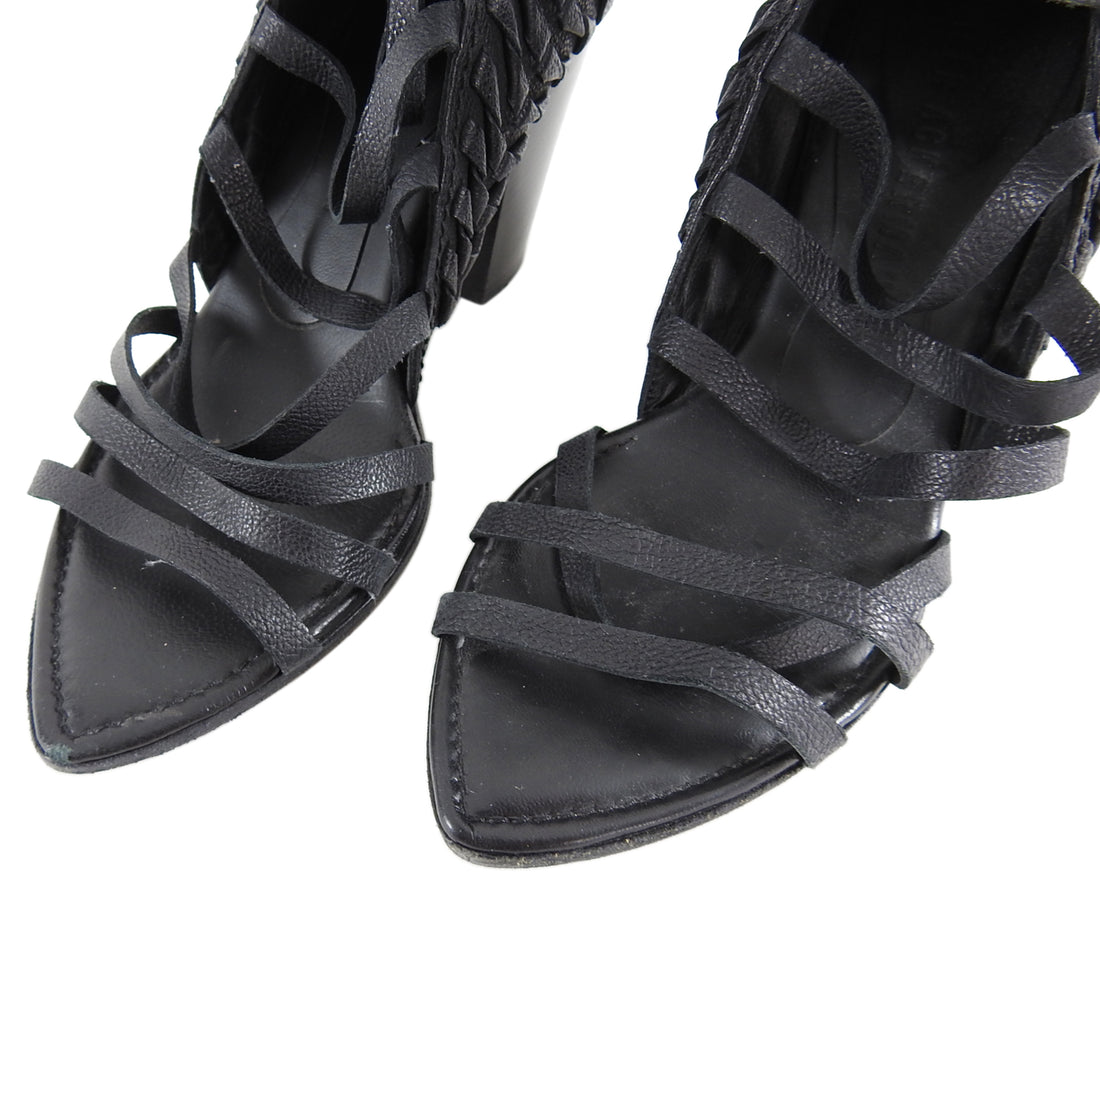 Haider Ackermann Black Leather Strappy Sandal Heels - 6.5